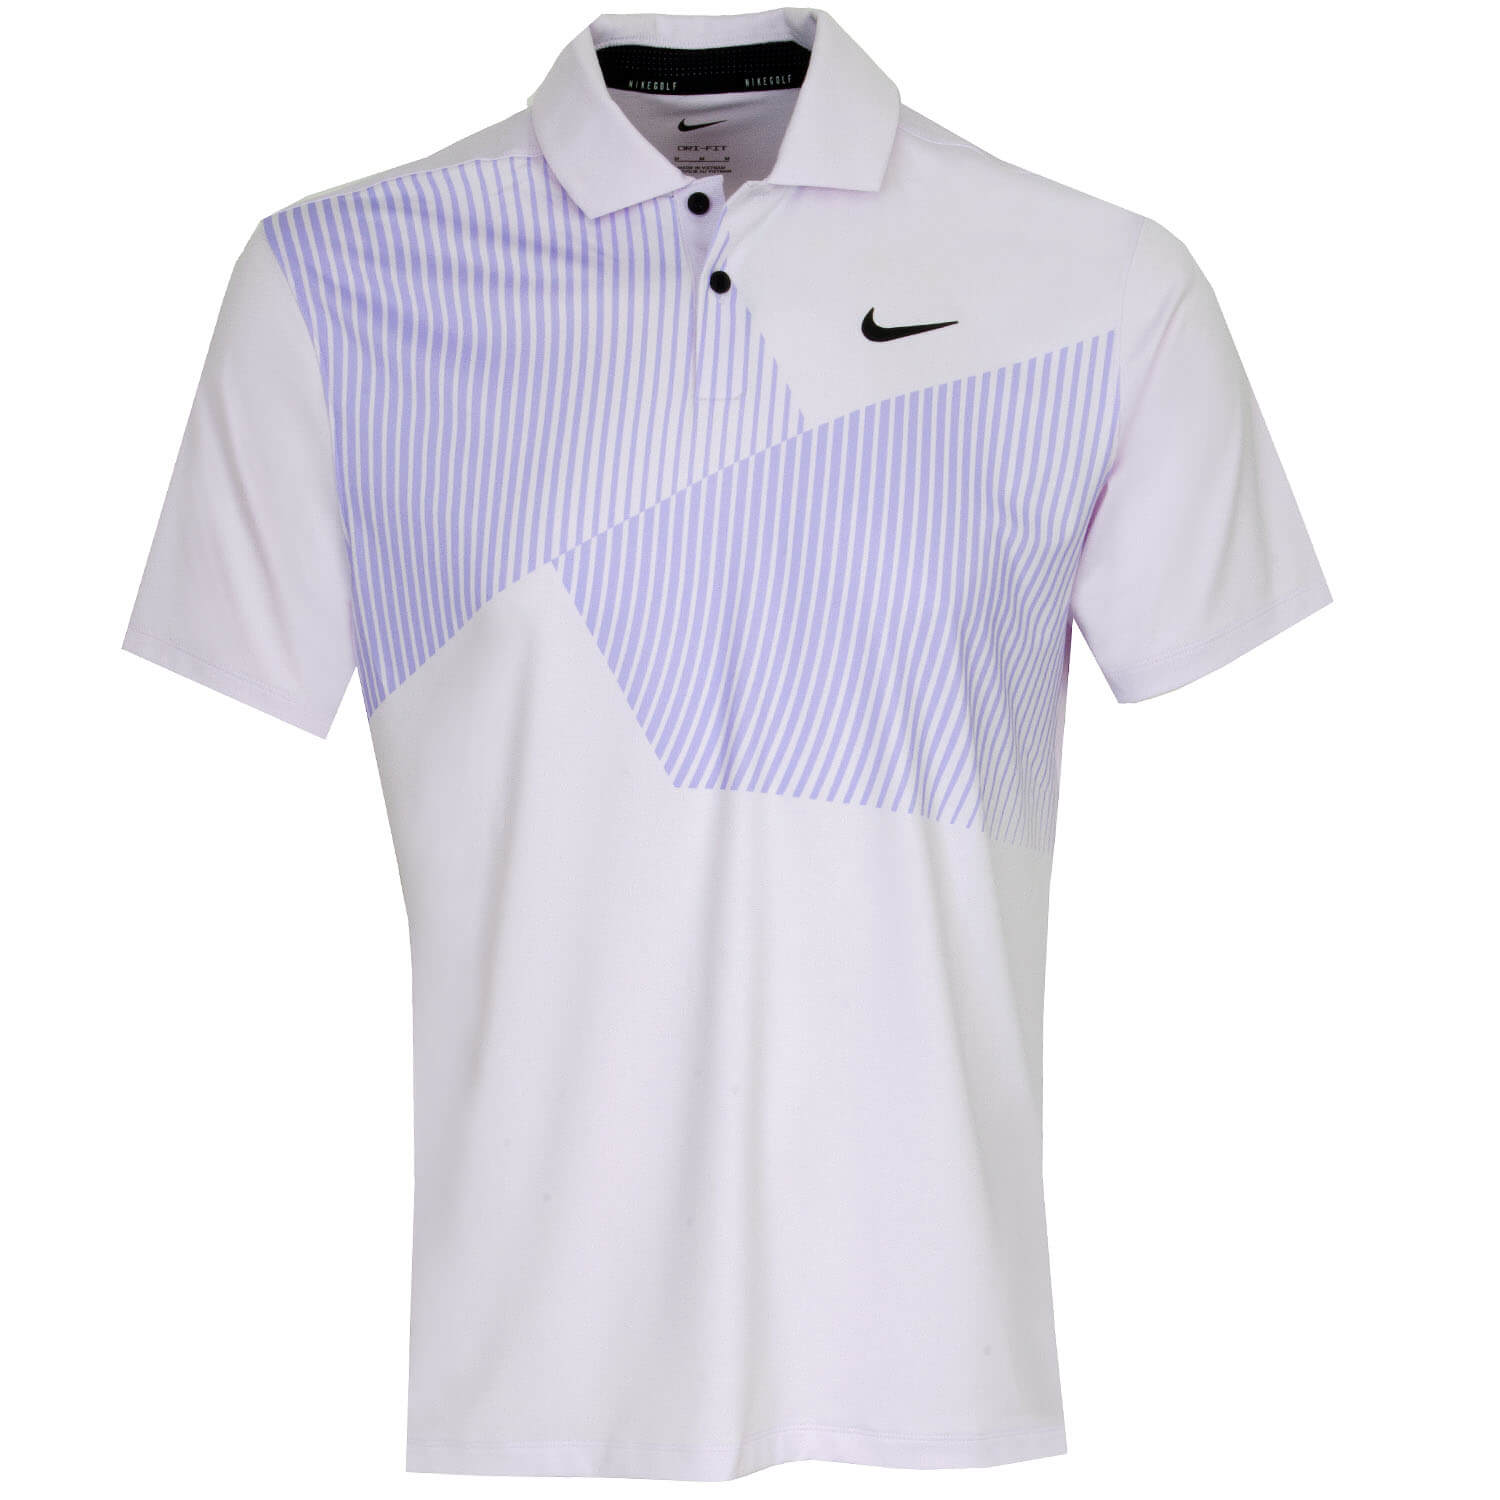 Nike Dri-FIT Vapor Print Golf Polo Shirt